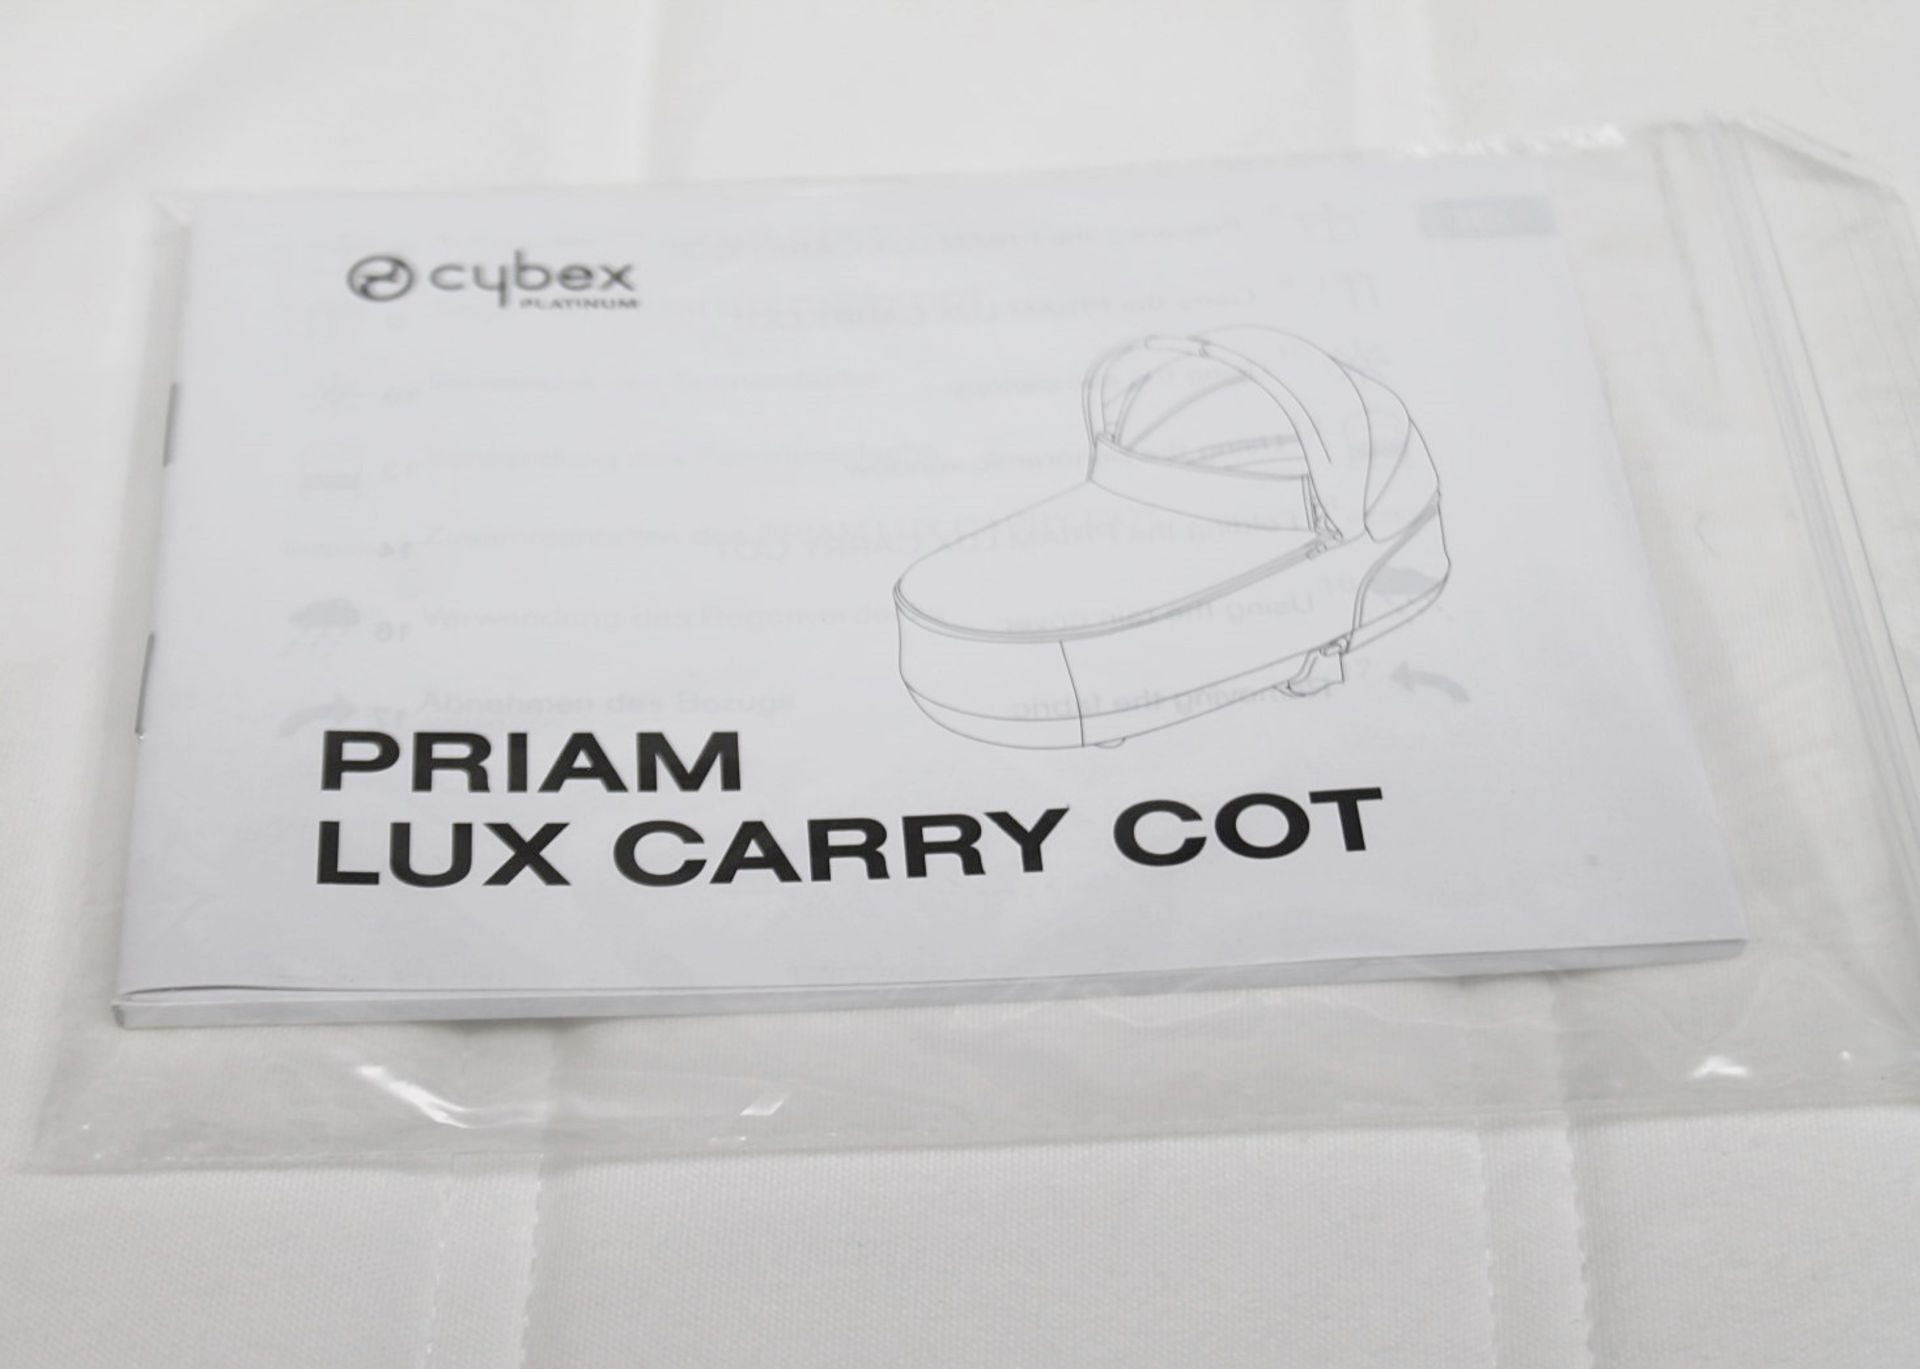 1 x CYBEX 'Priam' Luxury Carrycot In Black - Original Price £329.95 - Unused Boxed Stock - Image 14 of 19